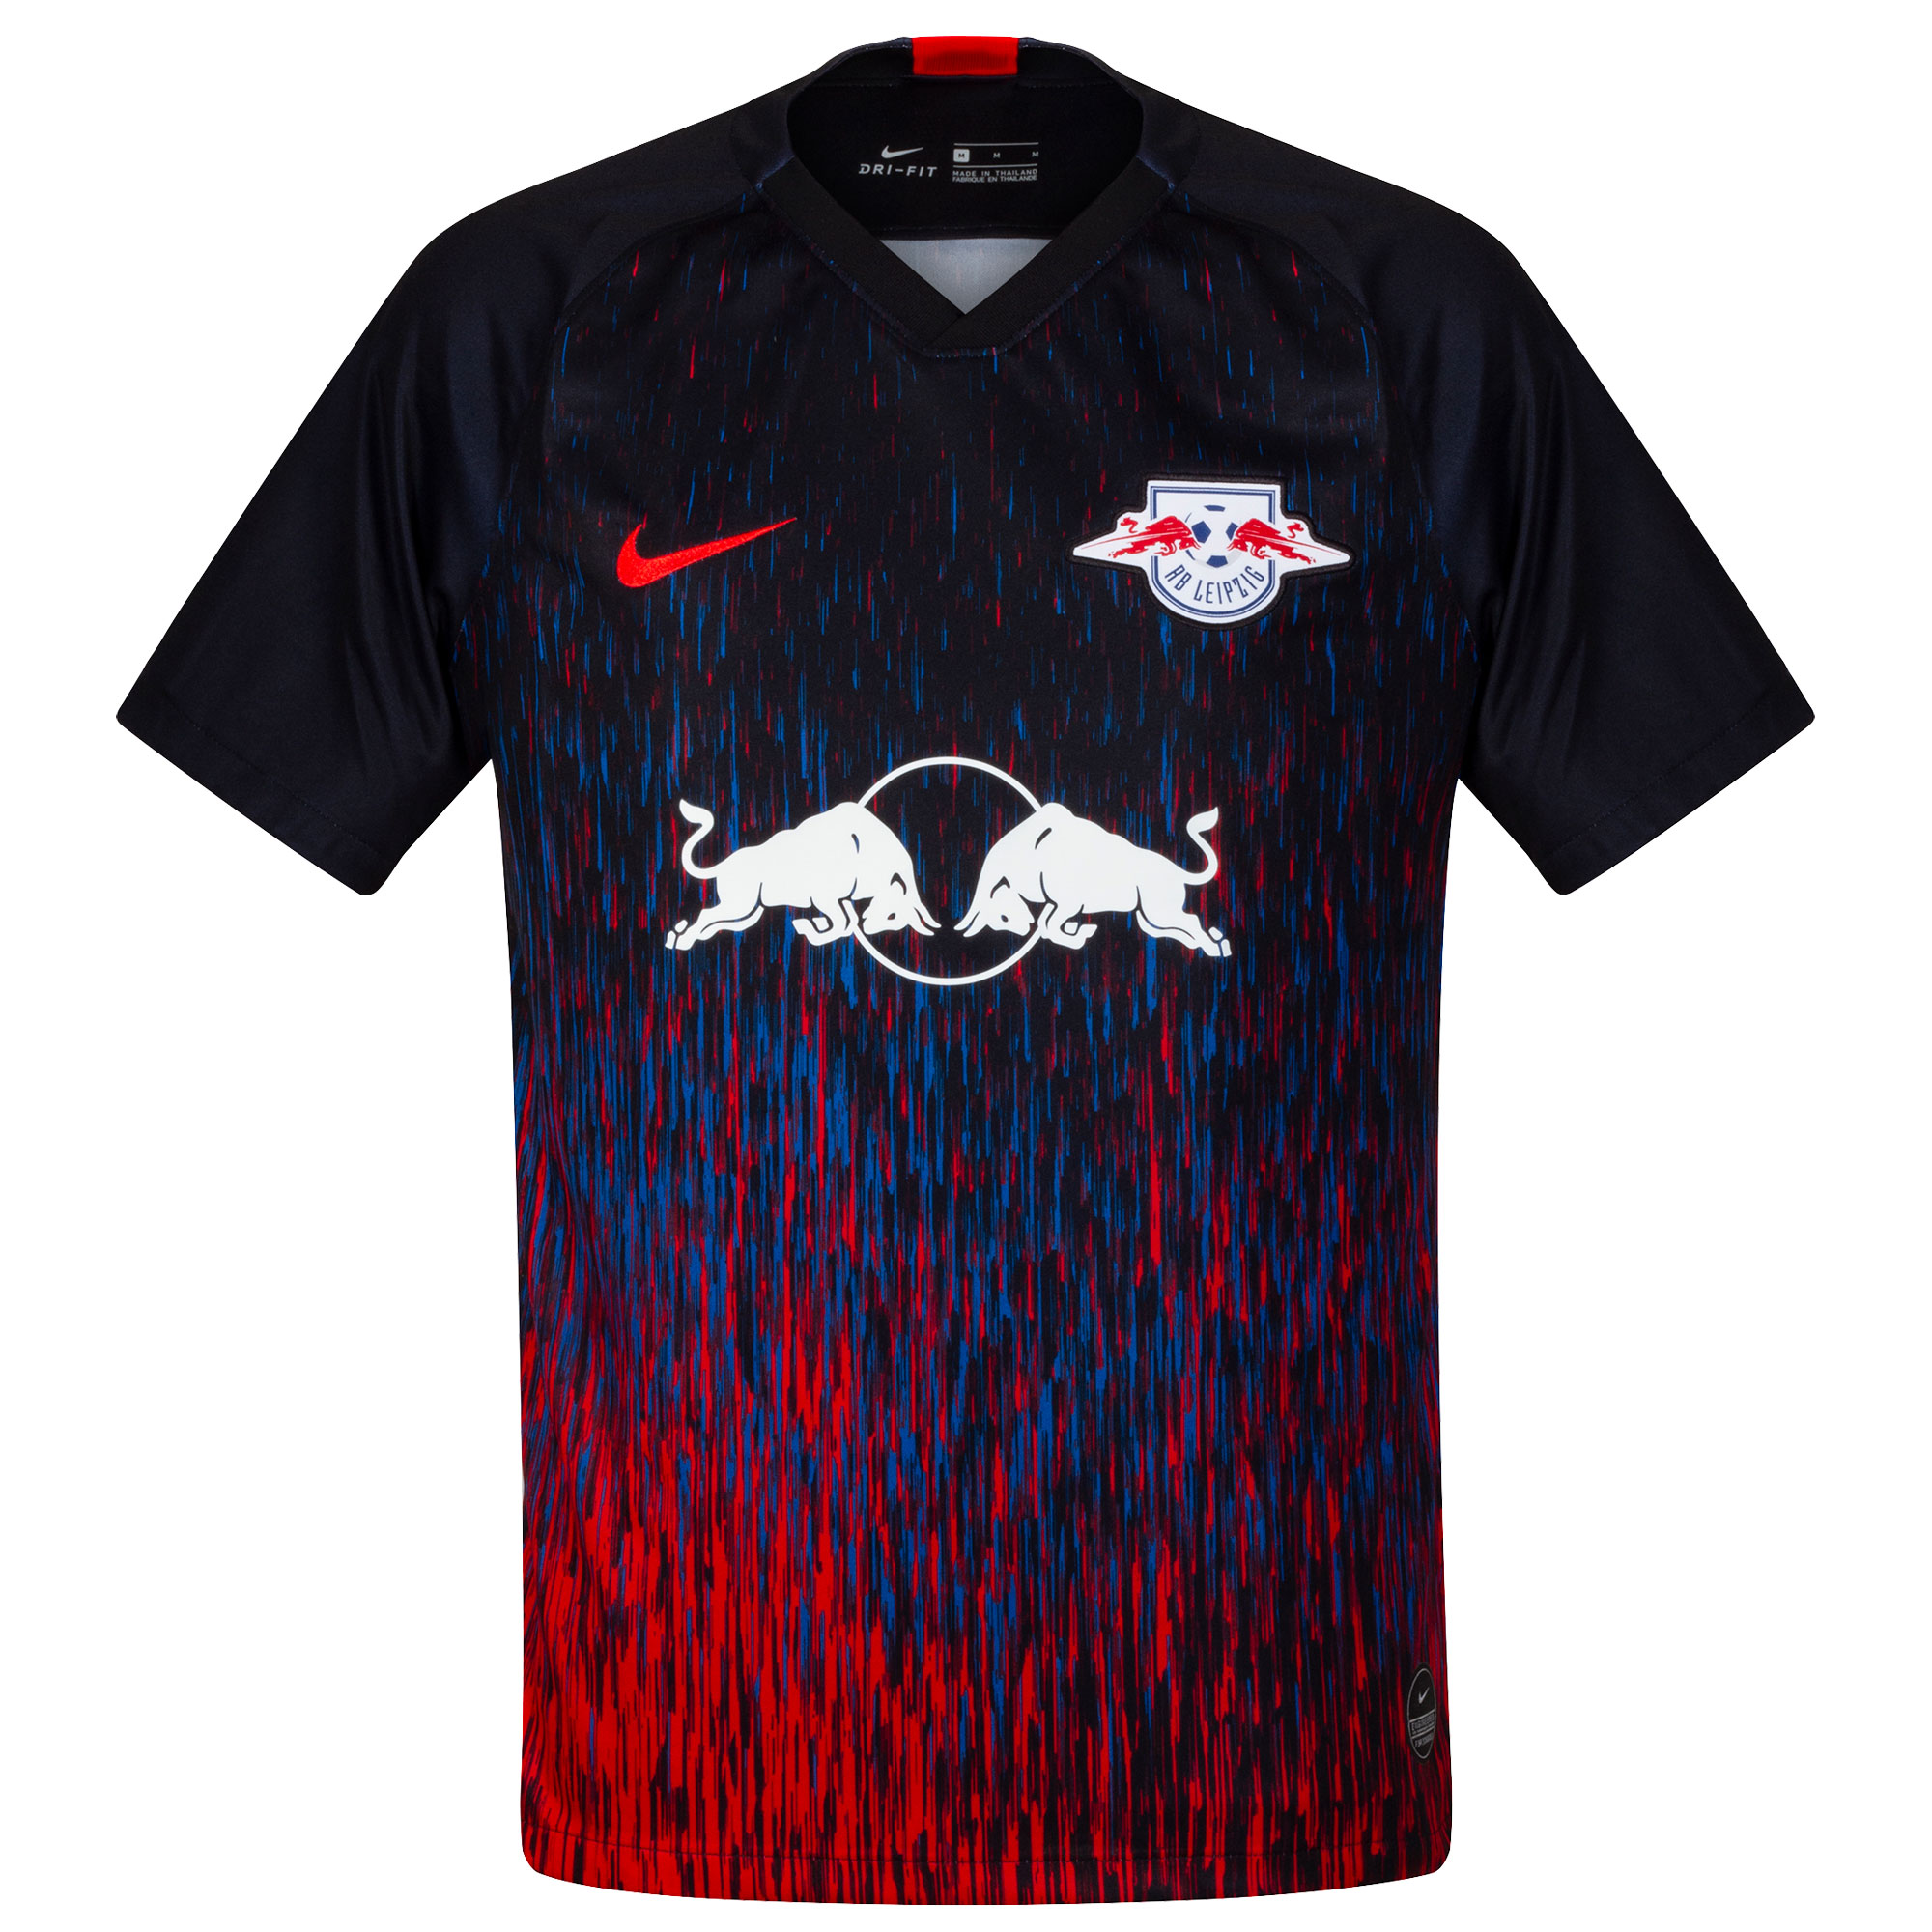 Red Bull Leipzig Third football shirt 2016 - 2017. Sponsored by Red Bull